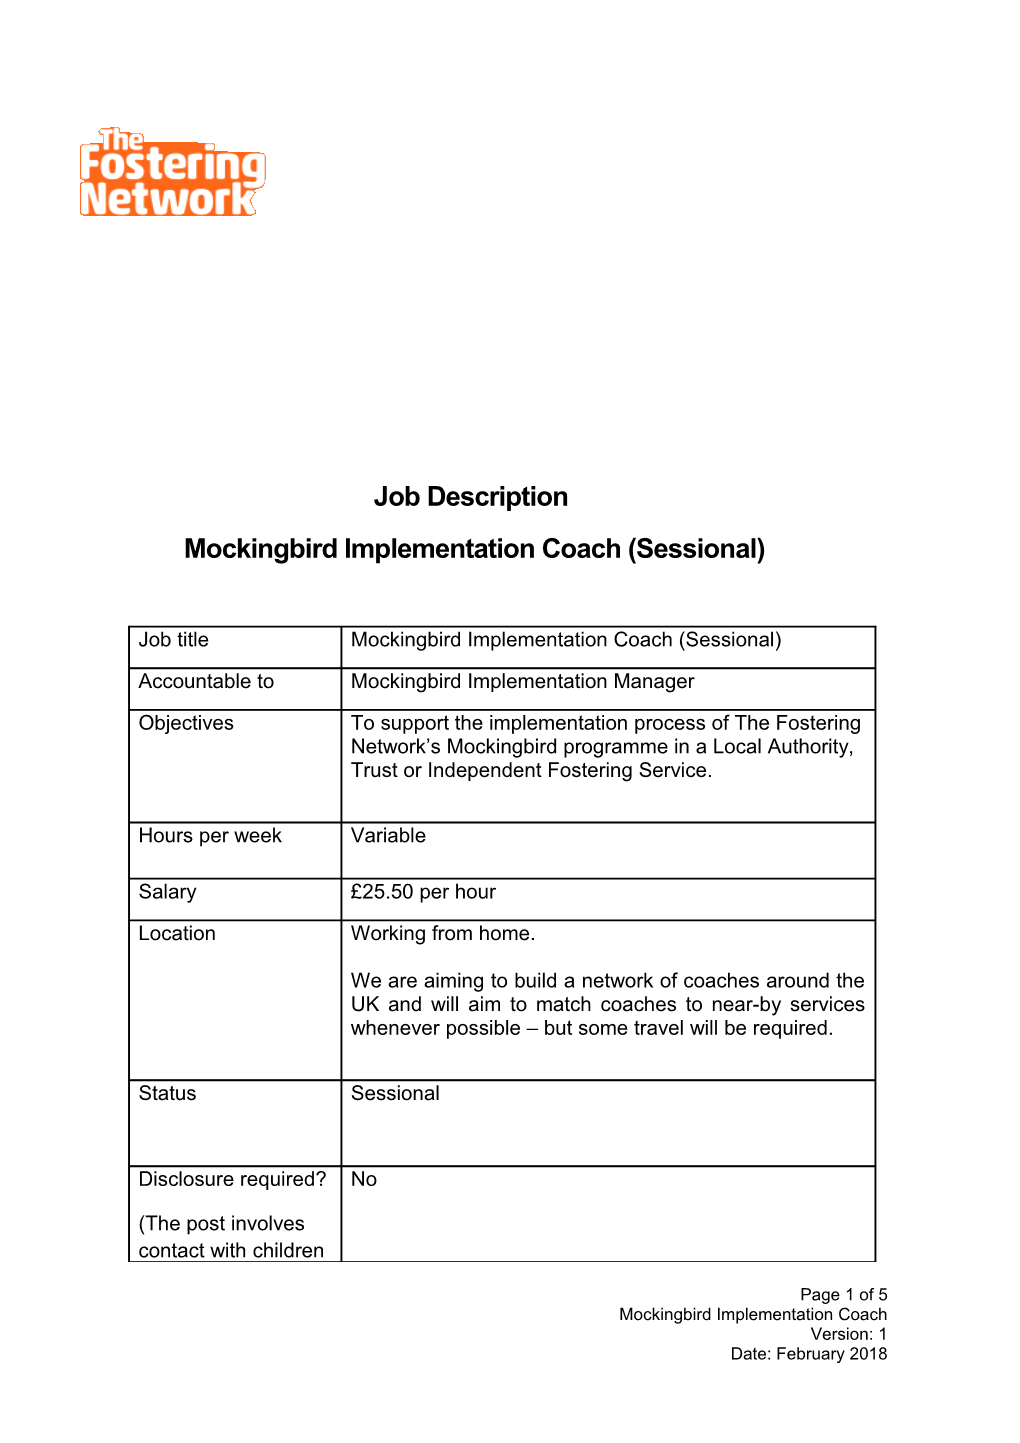 Mockingbird Implementation Coach (Sessional)